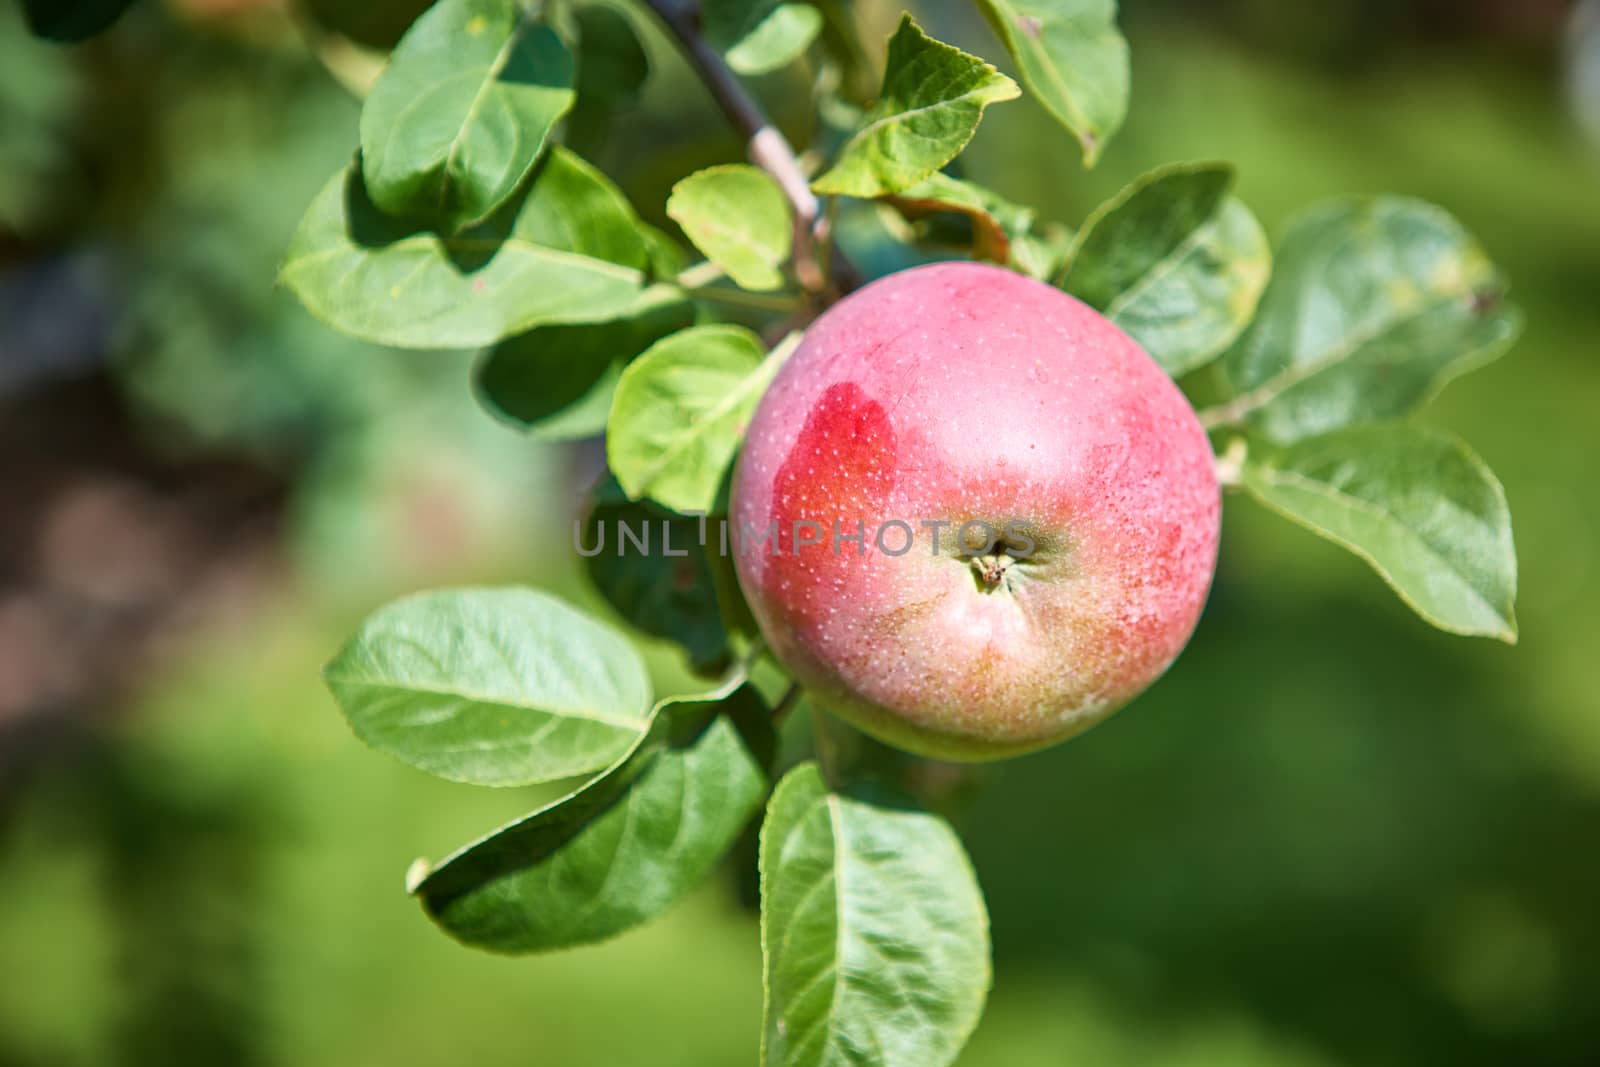 Organic apple tree with apple. Shallow dof